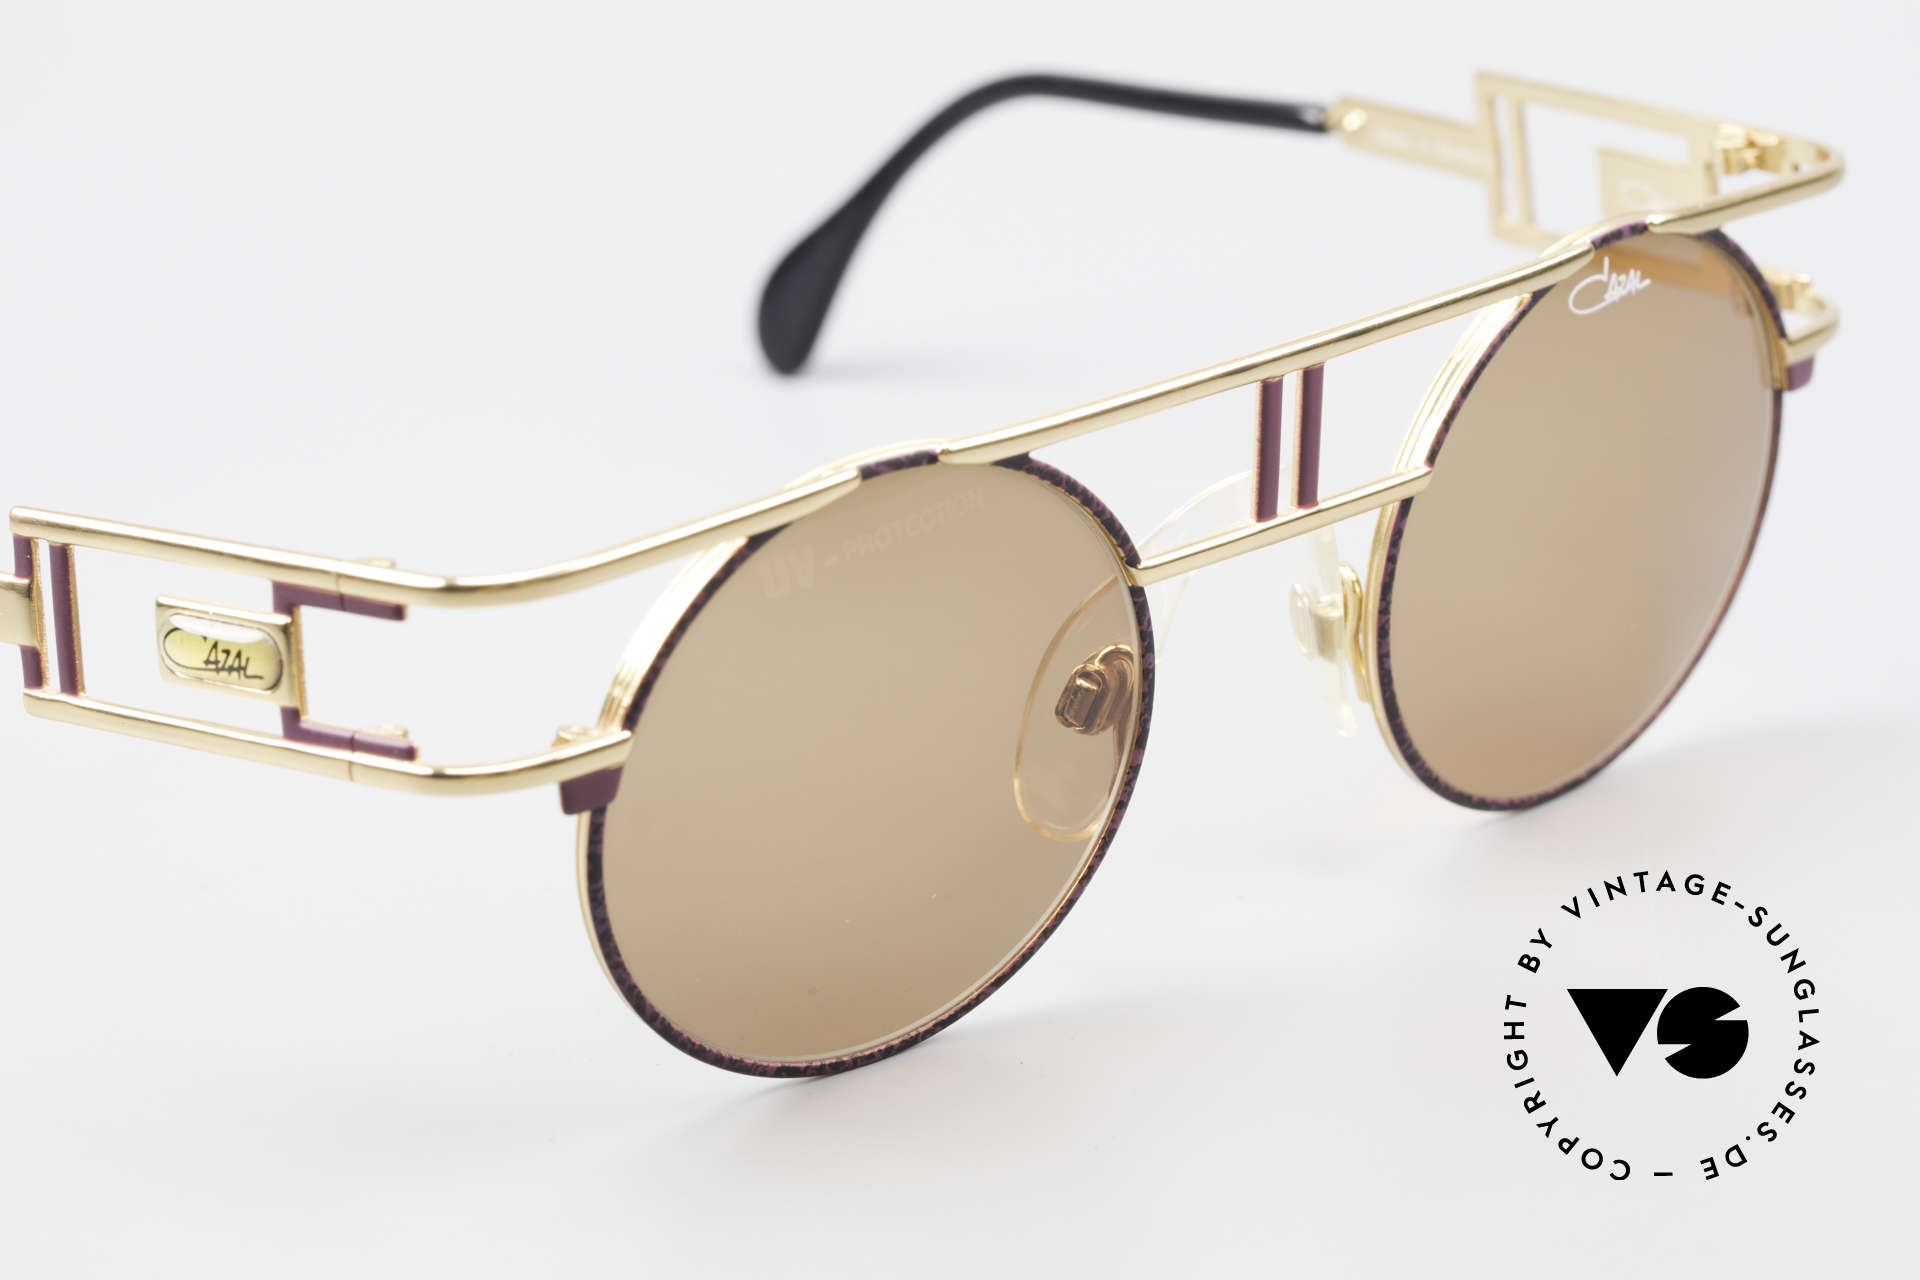 Cazal 958 1990's Vanilla Ice Sunglasses, NO RETRO sunglasses, but an authentic 90's rarity!, Made for Men and Women